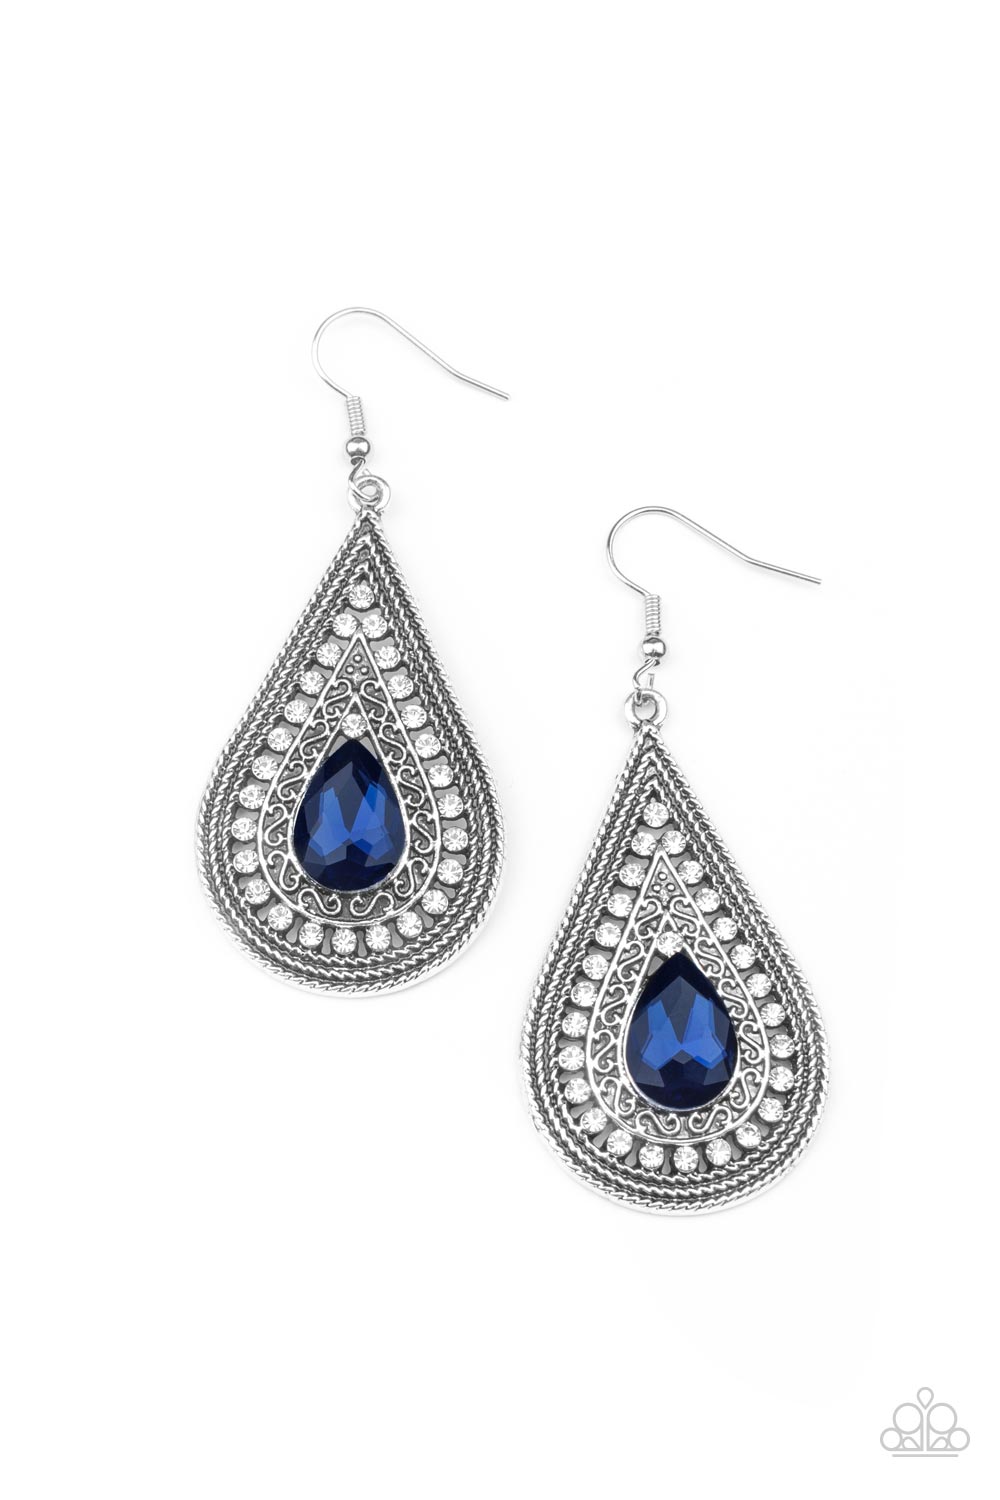 Metro Masquerade Blue Gem Earrings - Paparazzi Accessories- lightbox - CarasShop.com - $5 Jewelry by Cara Jewels